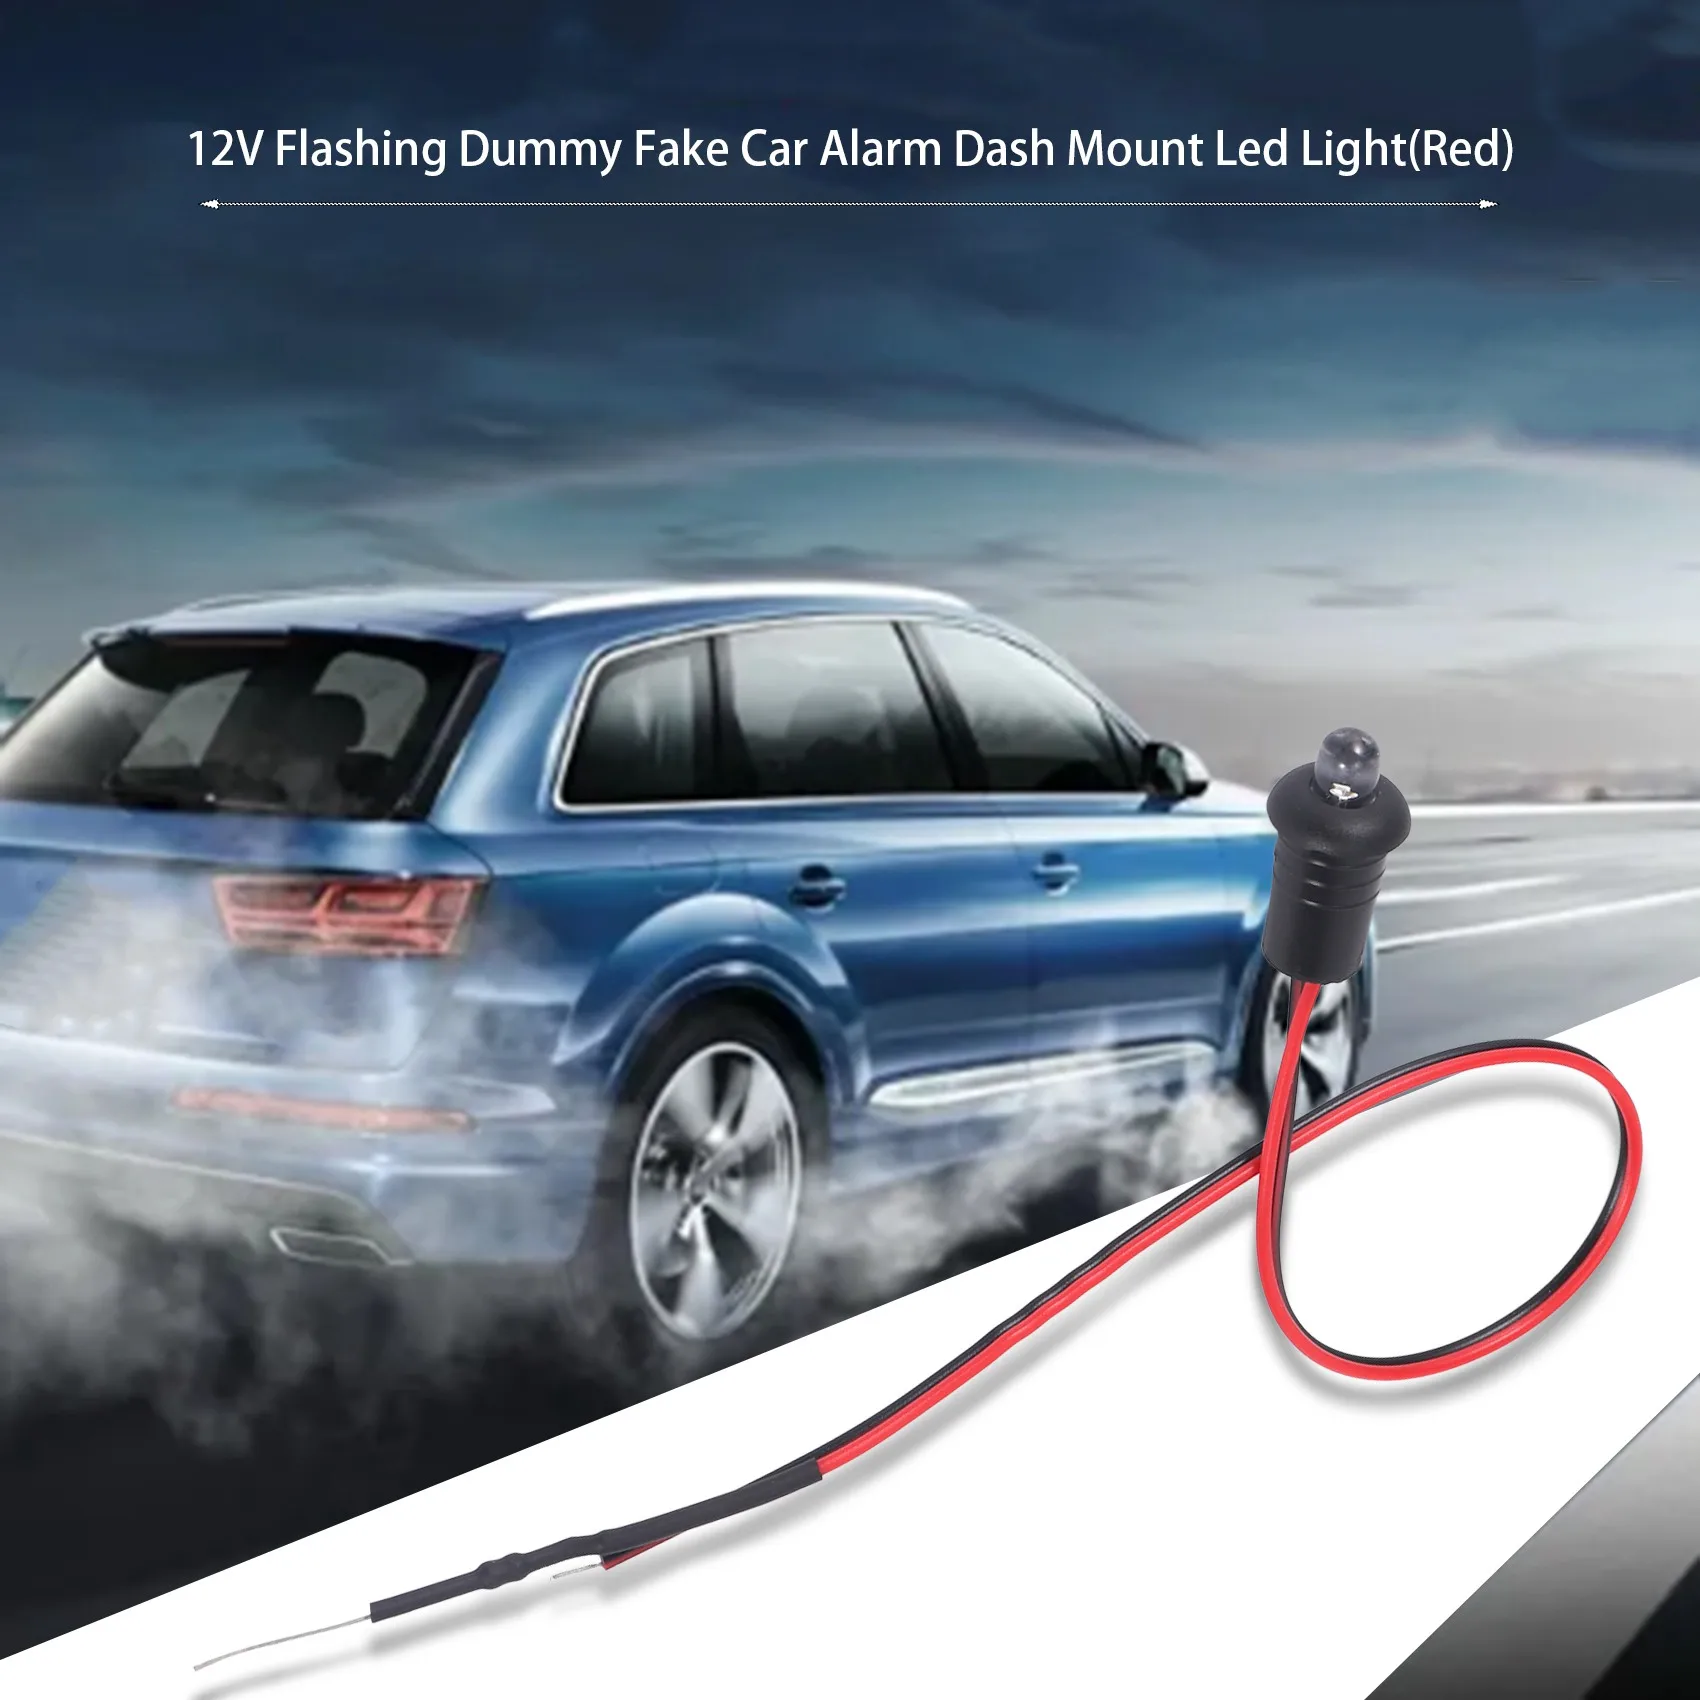 12V Flashing Dummy Fake Car Alarm Dash Mount Led Light(Red)